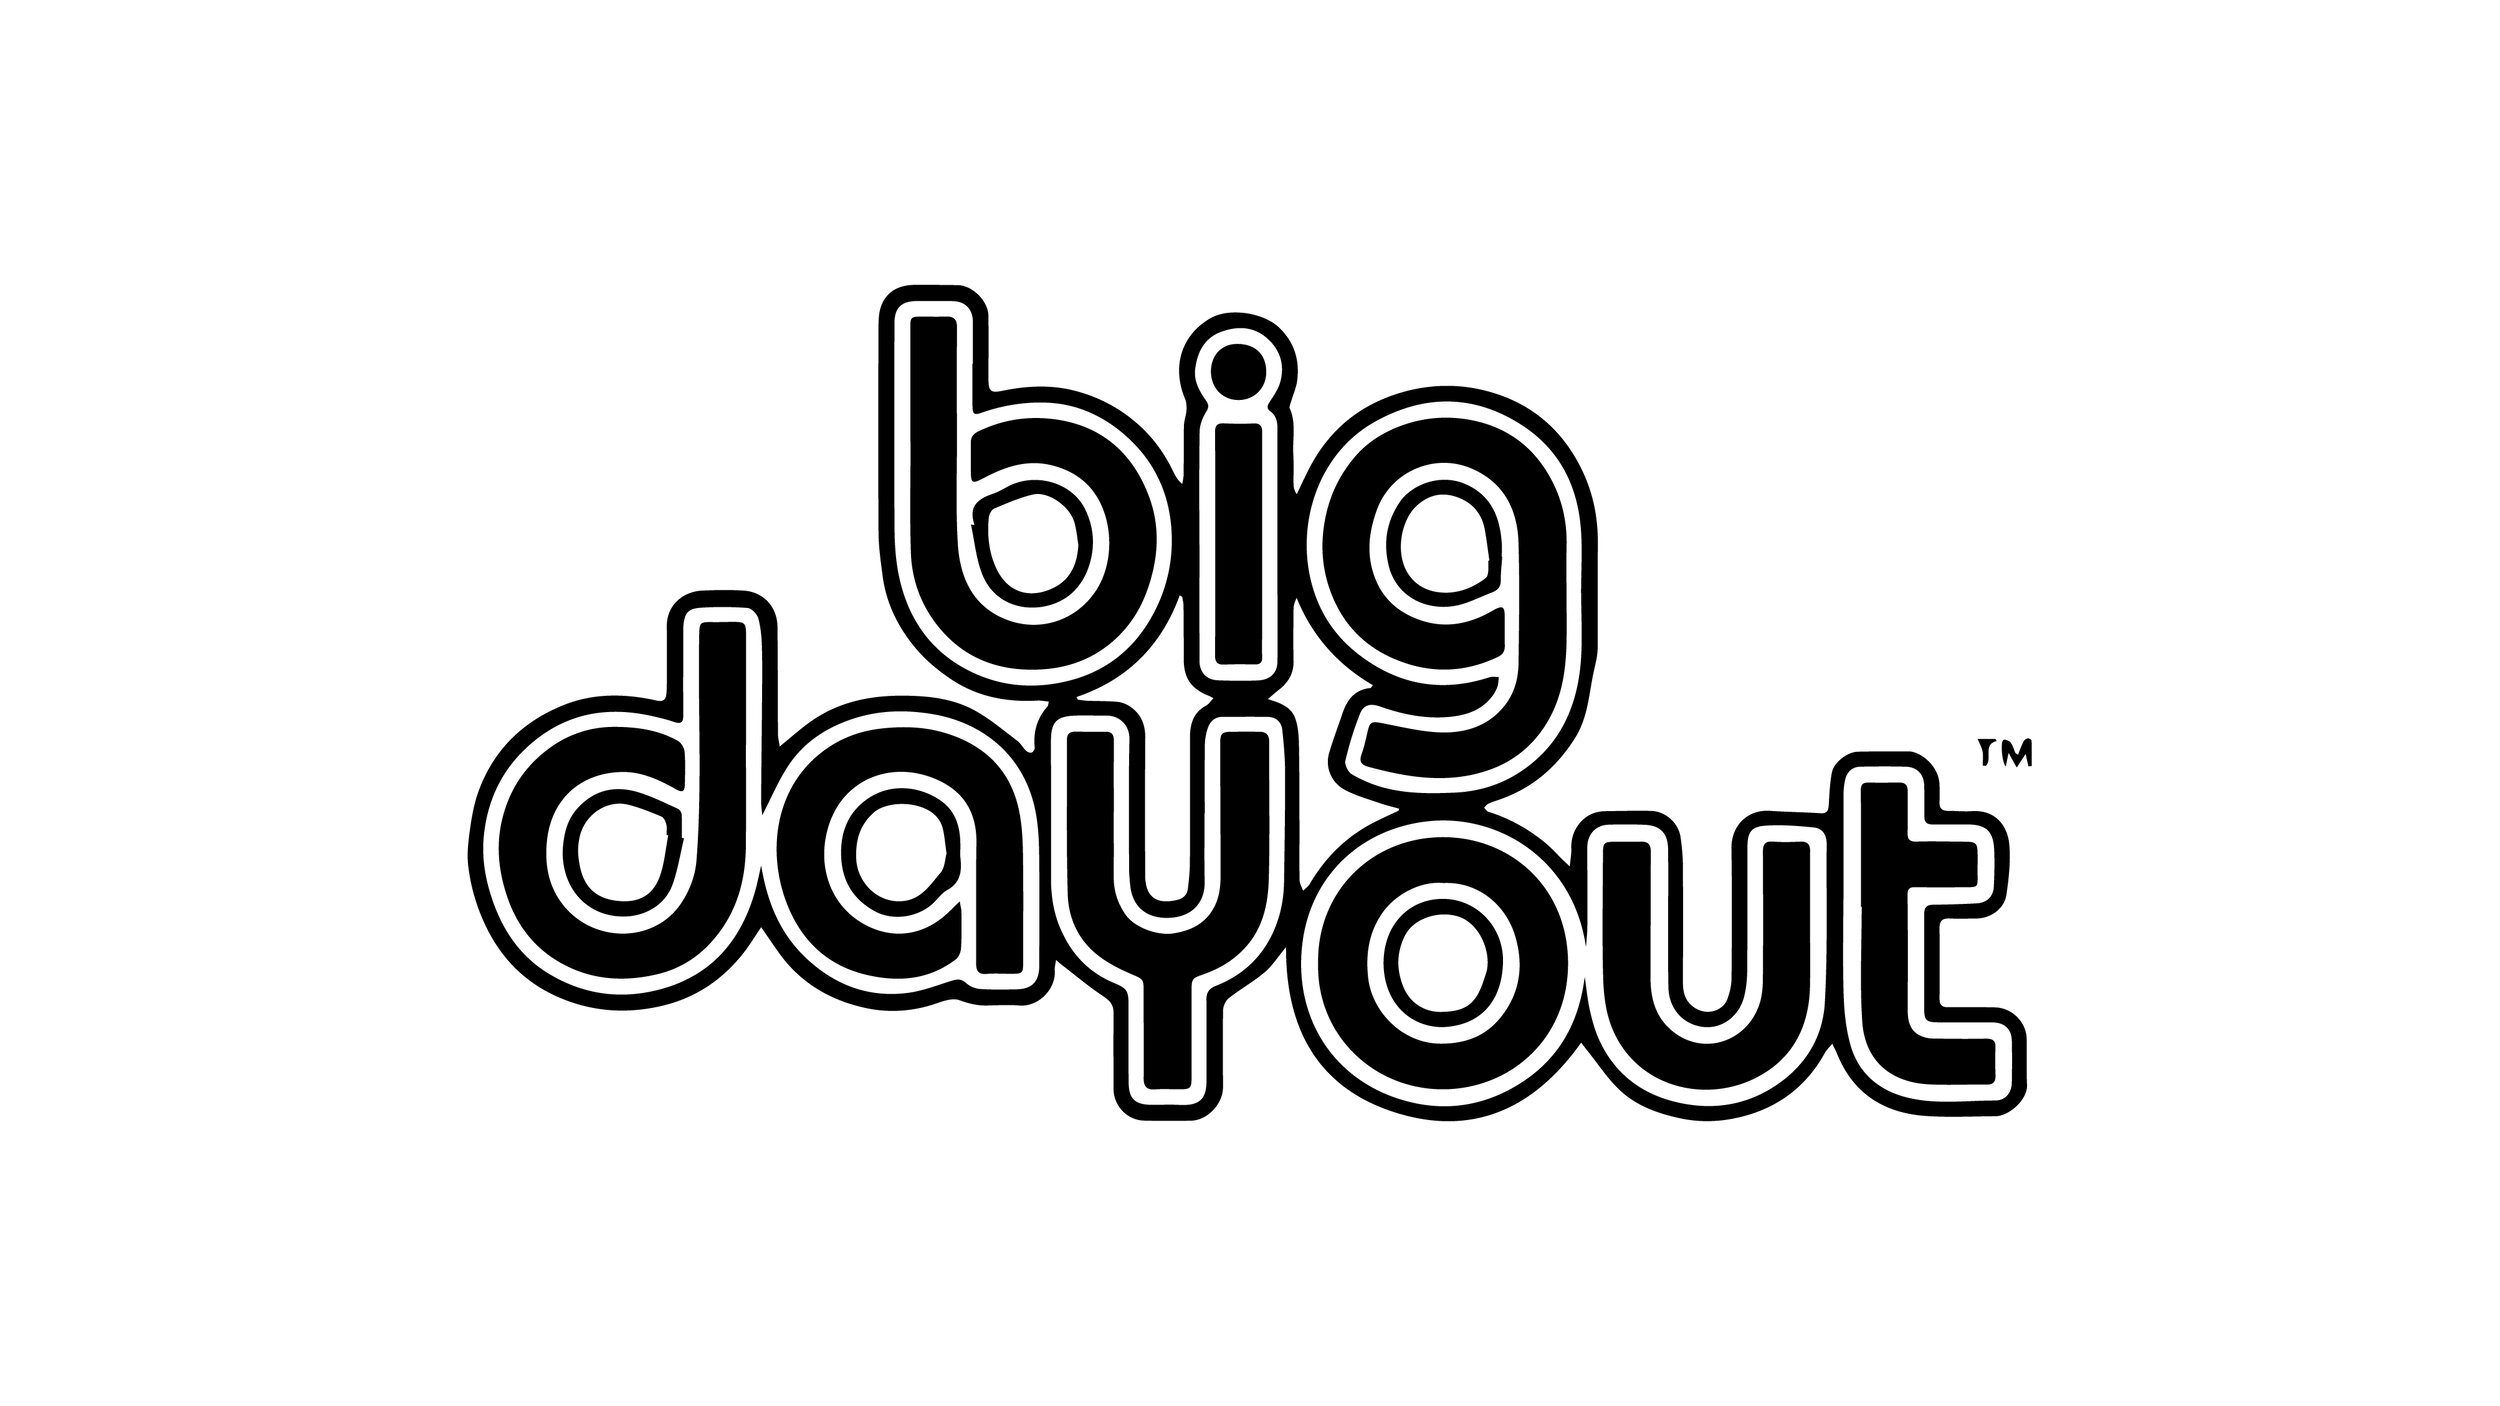 Logo_Big_Day_Out.jpg